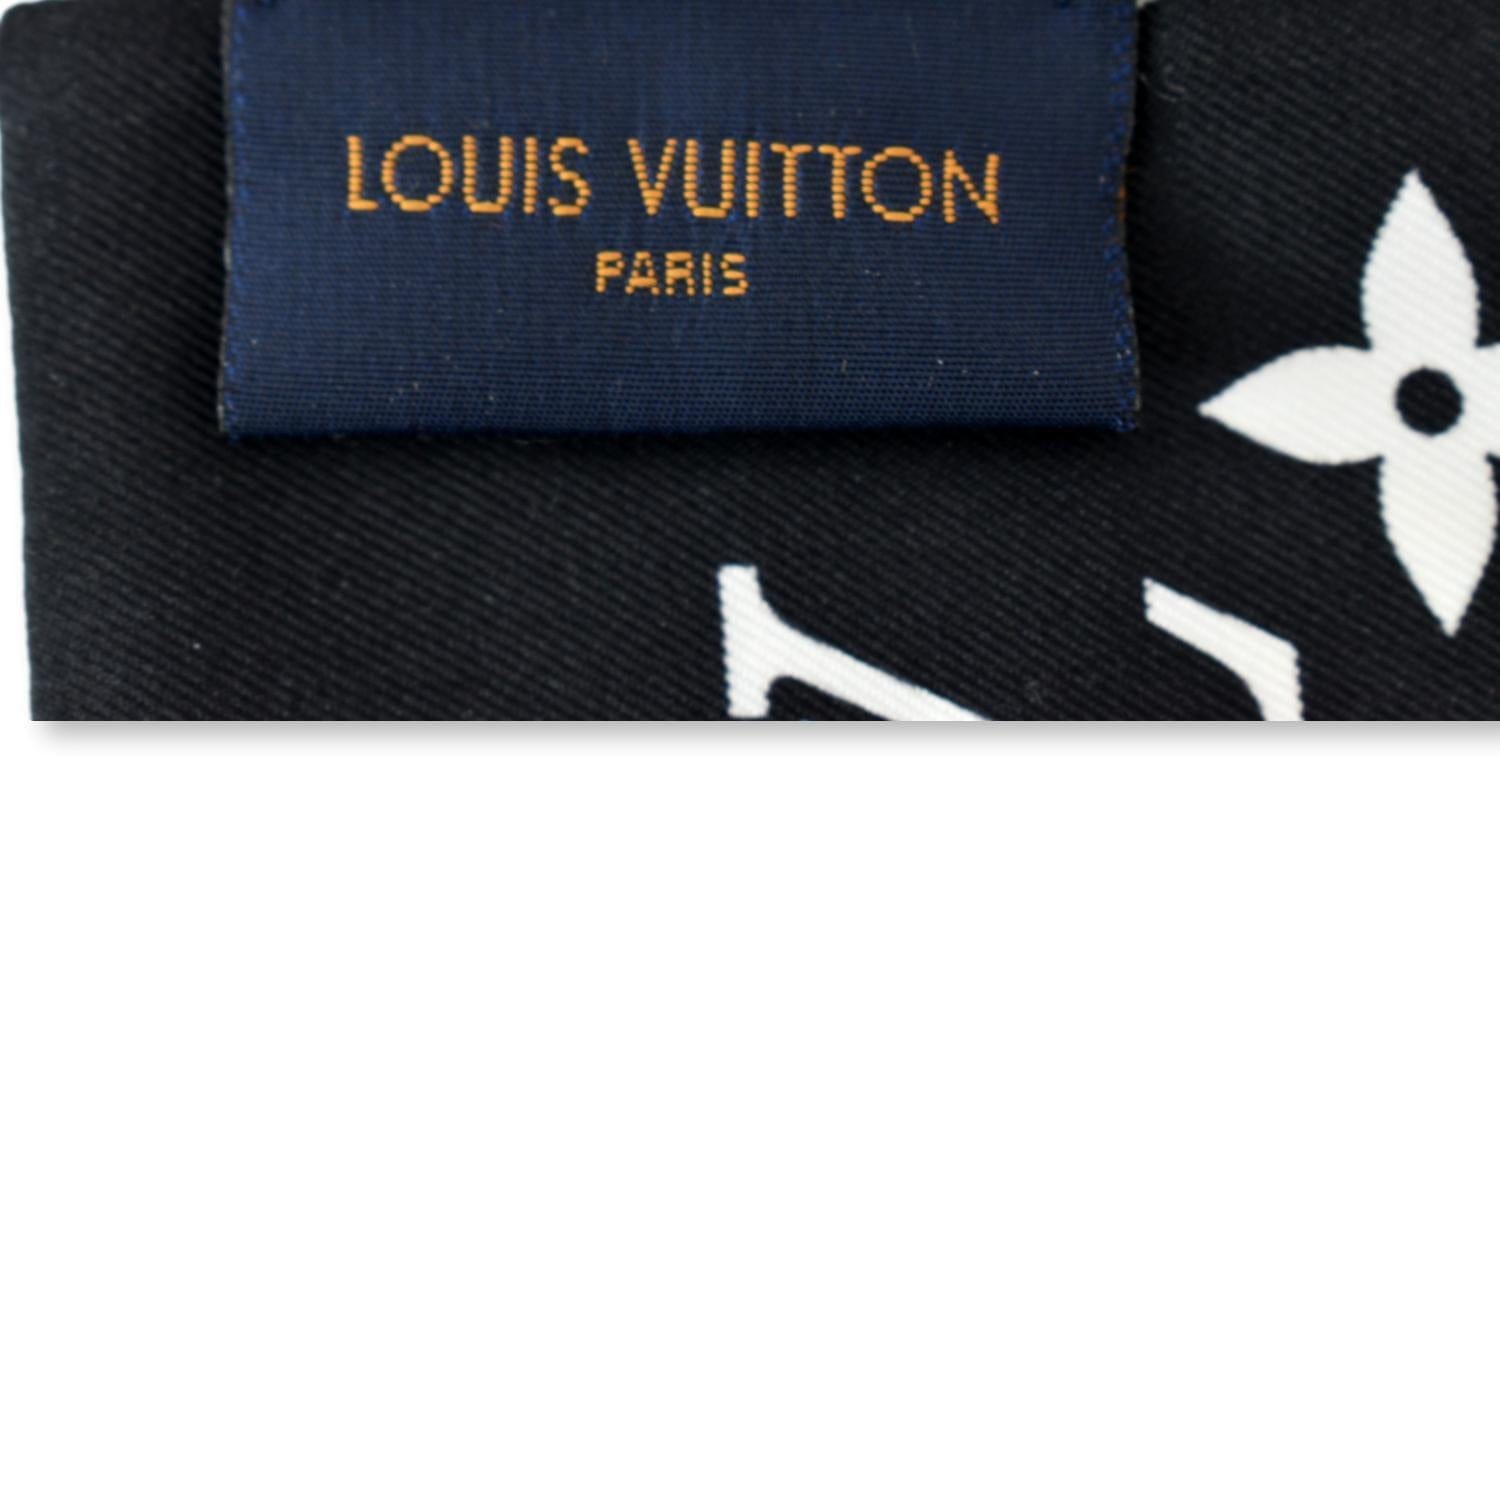 $200 HEADSCARF ?!? 😱😳  Louis Vuitton Monogram Confidential